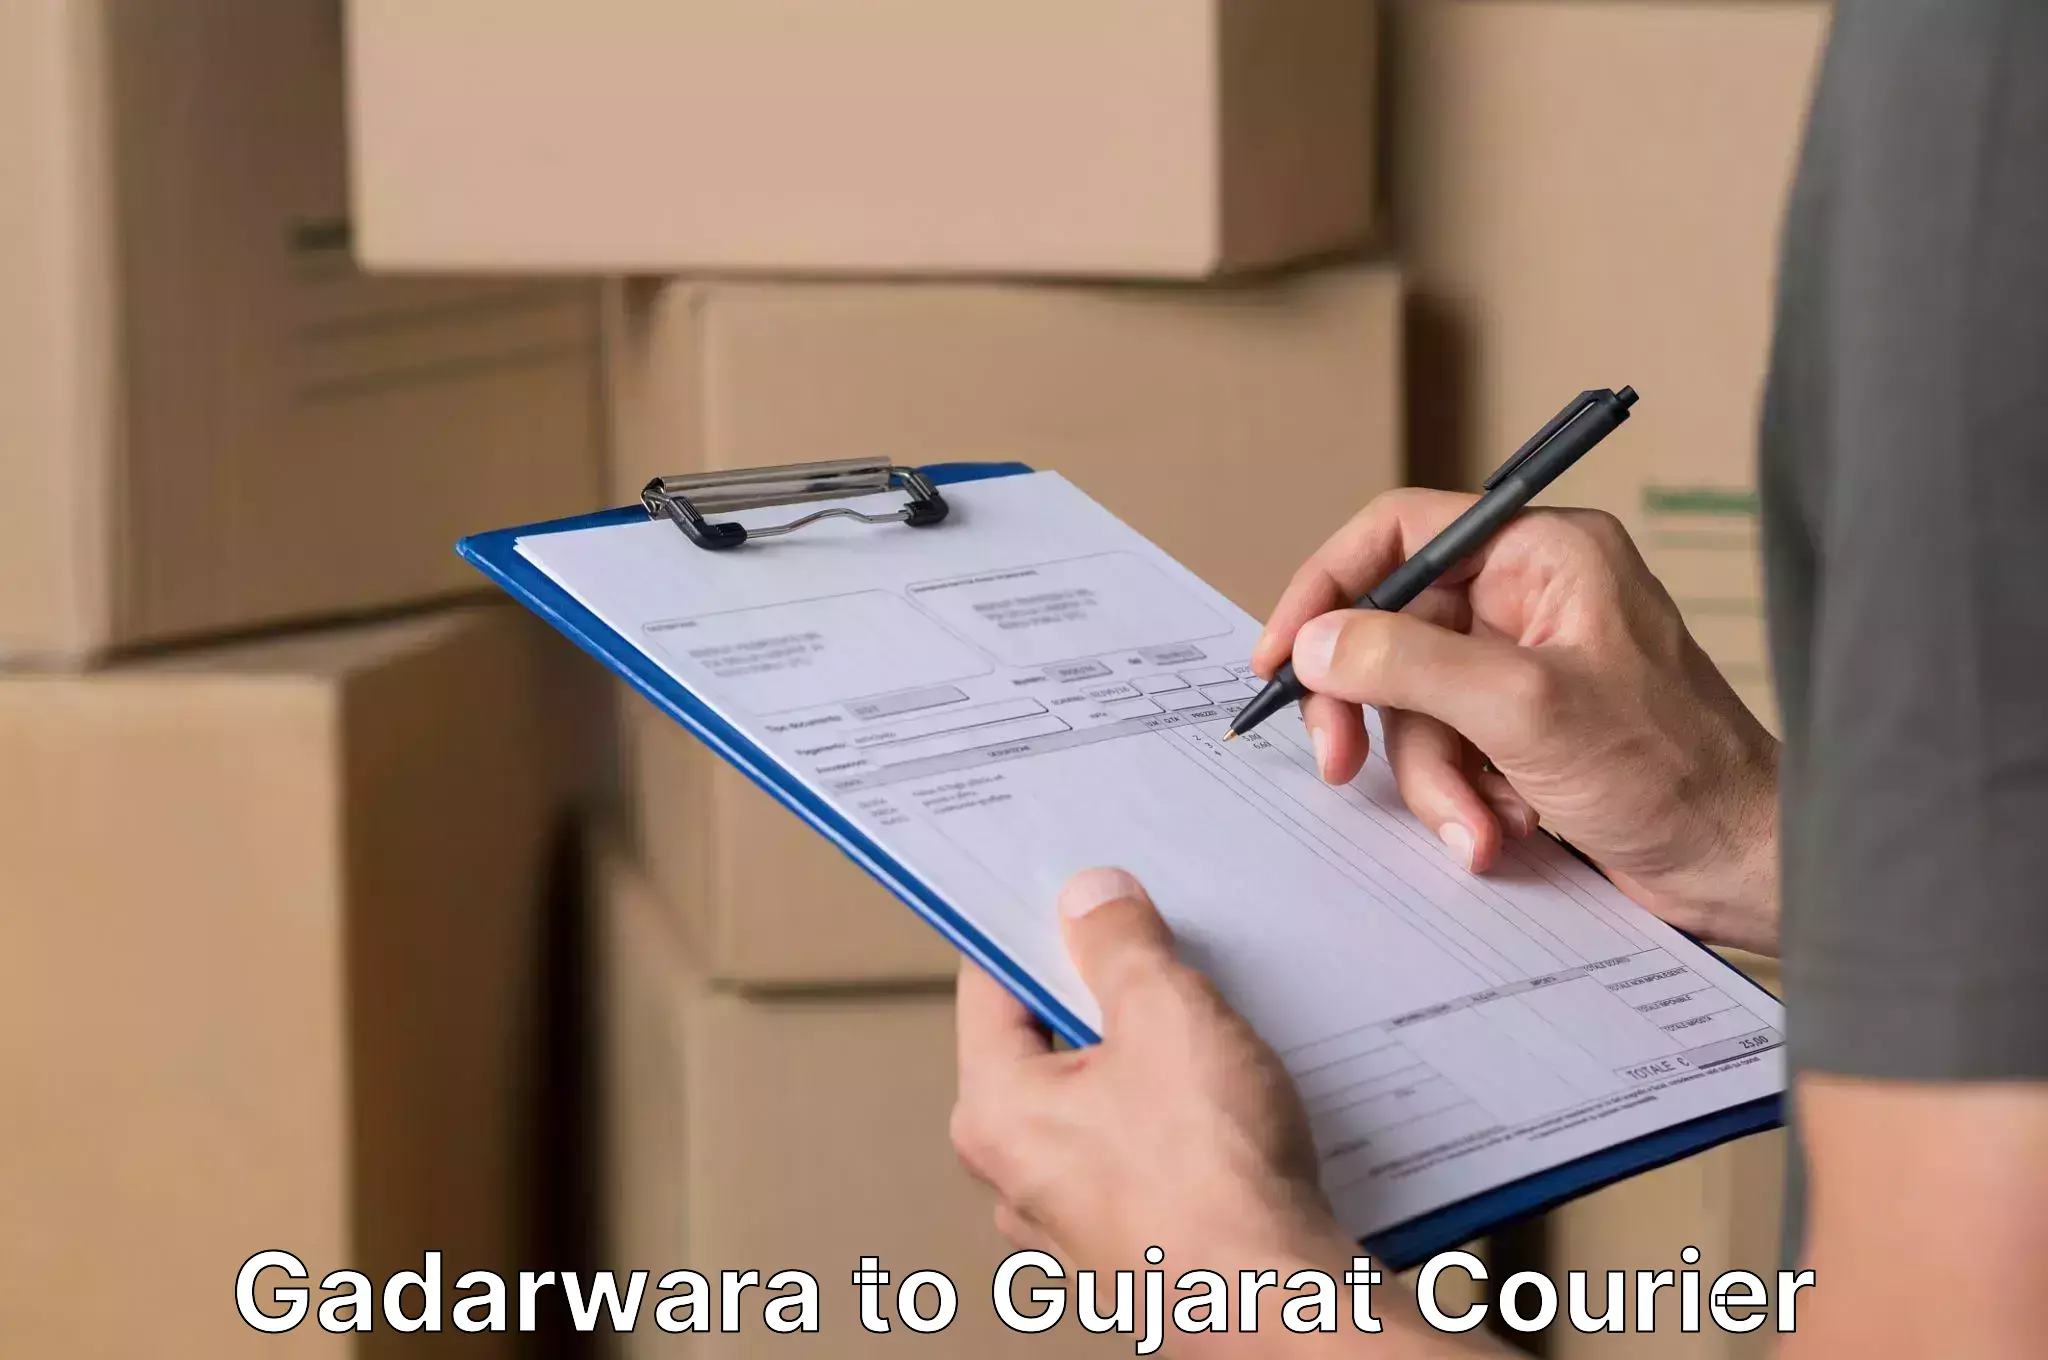 Quality relocation services Gadarwara to GIDC